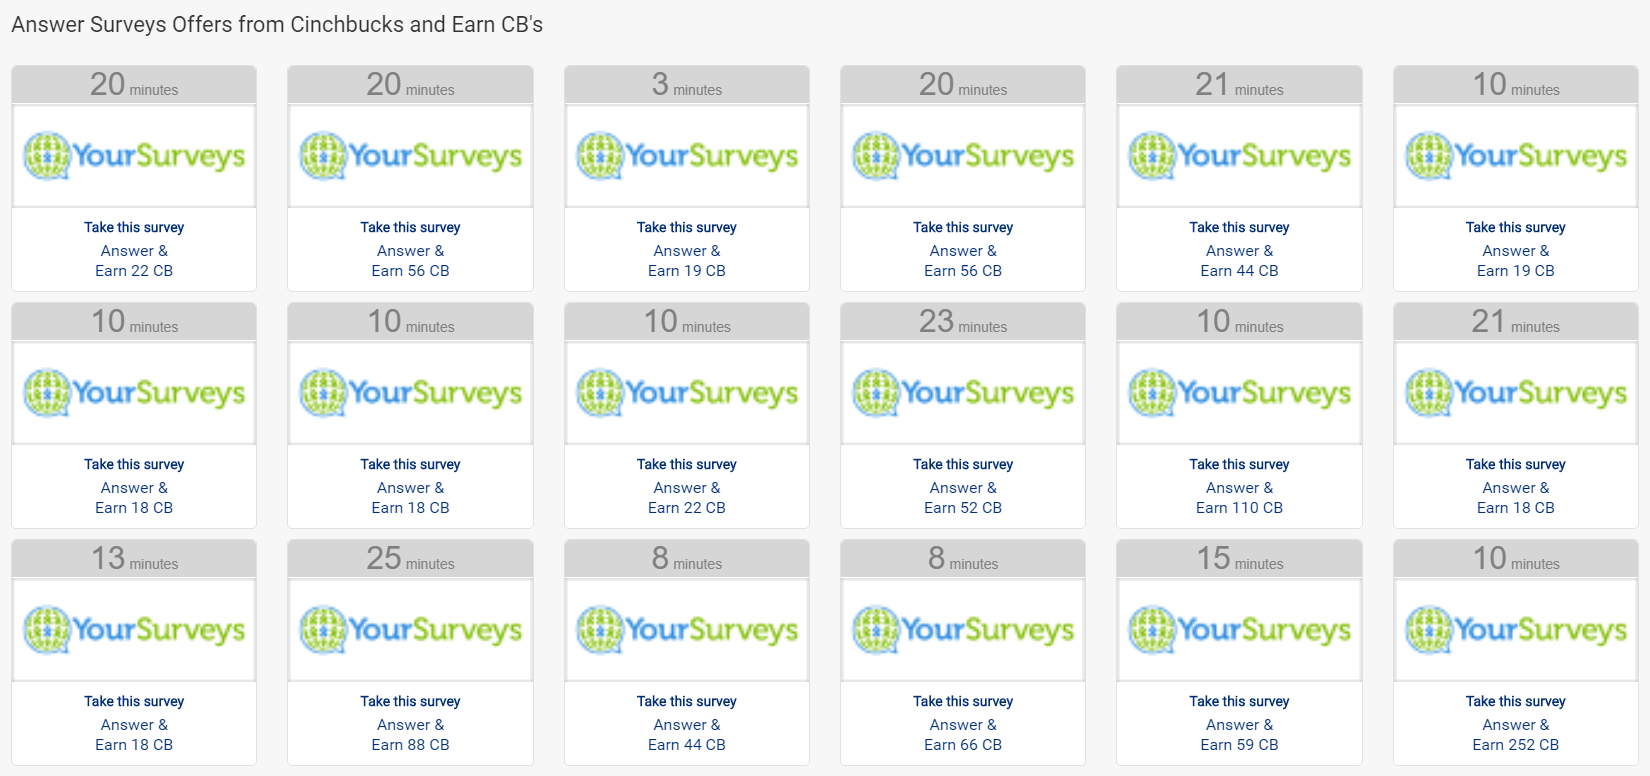 Cinchbucks surveys